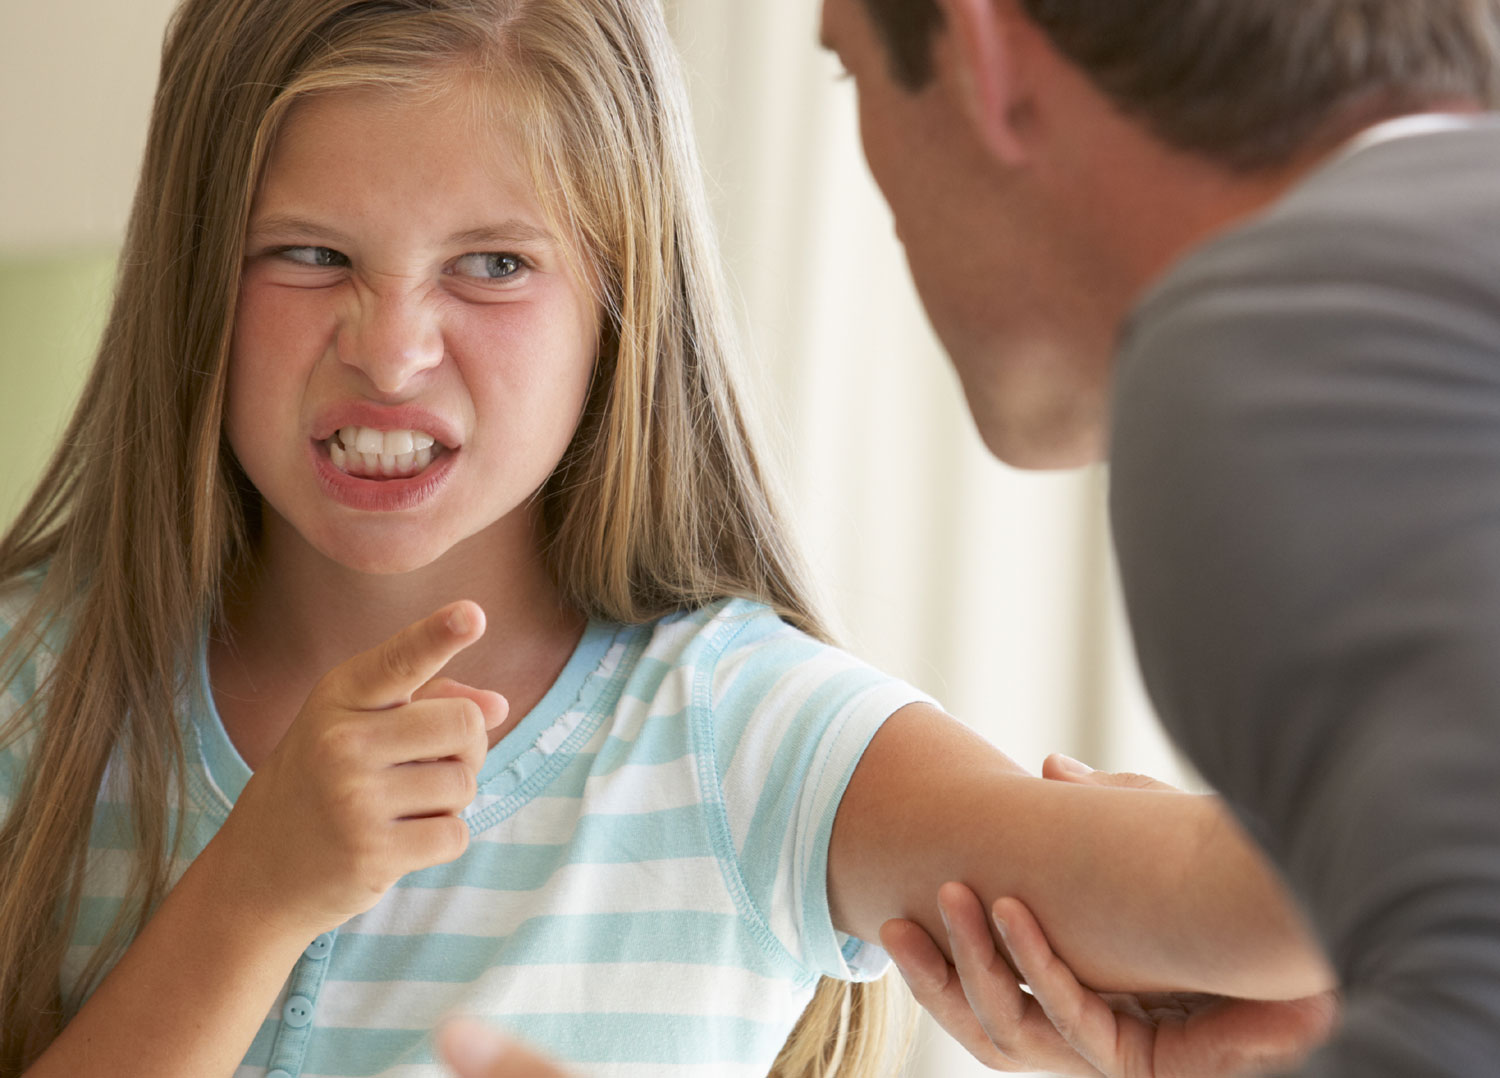 Daughter abuse